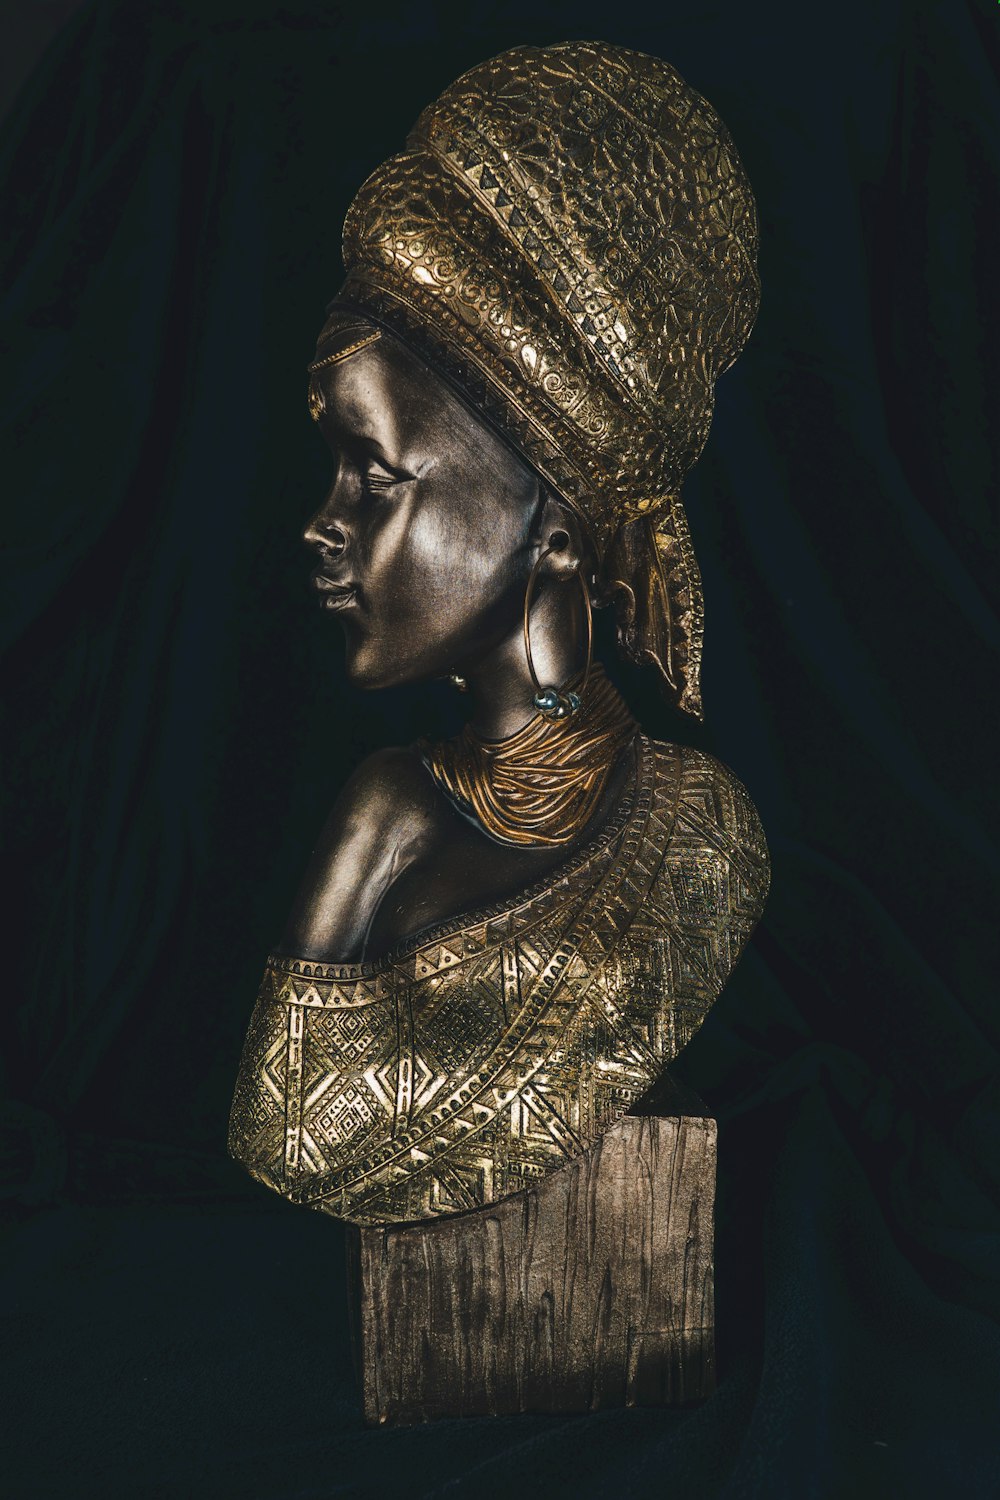 a statue of a woman wearing a gold headdress